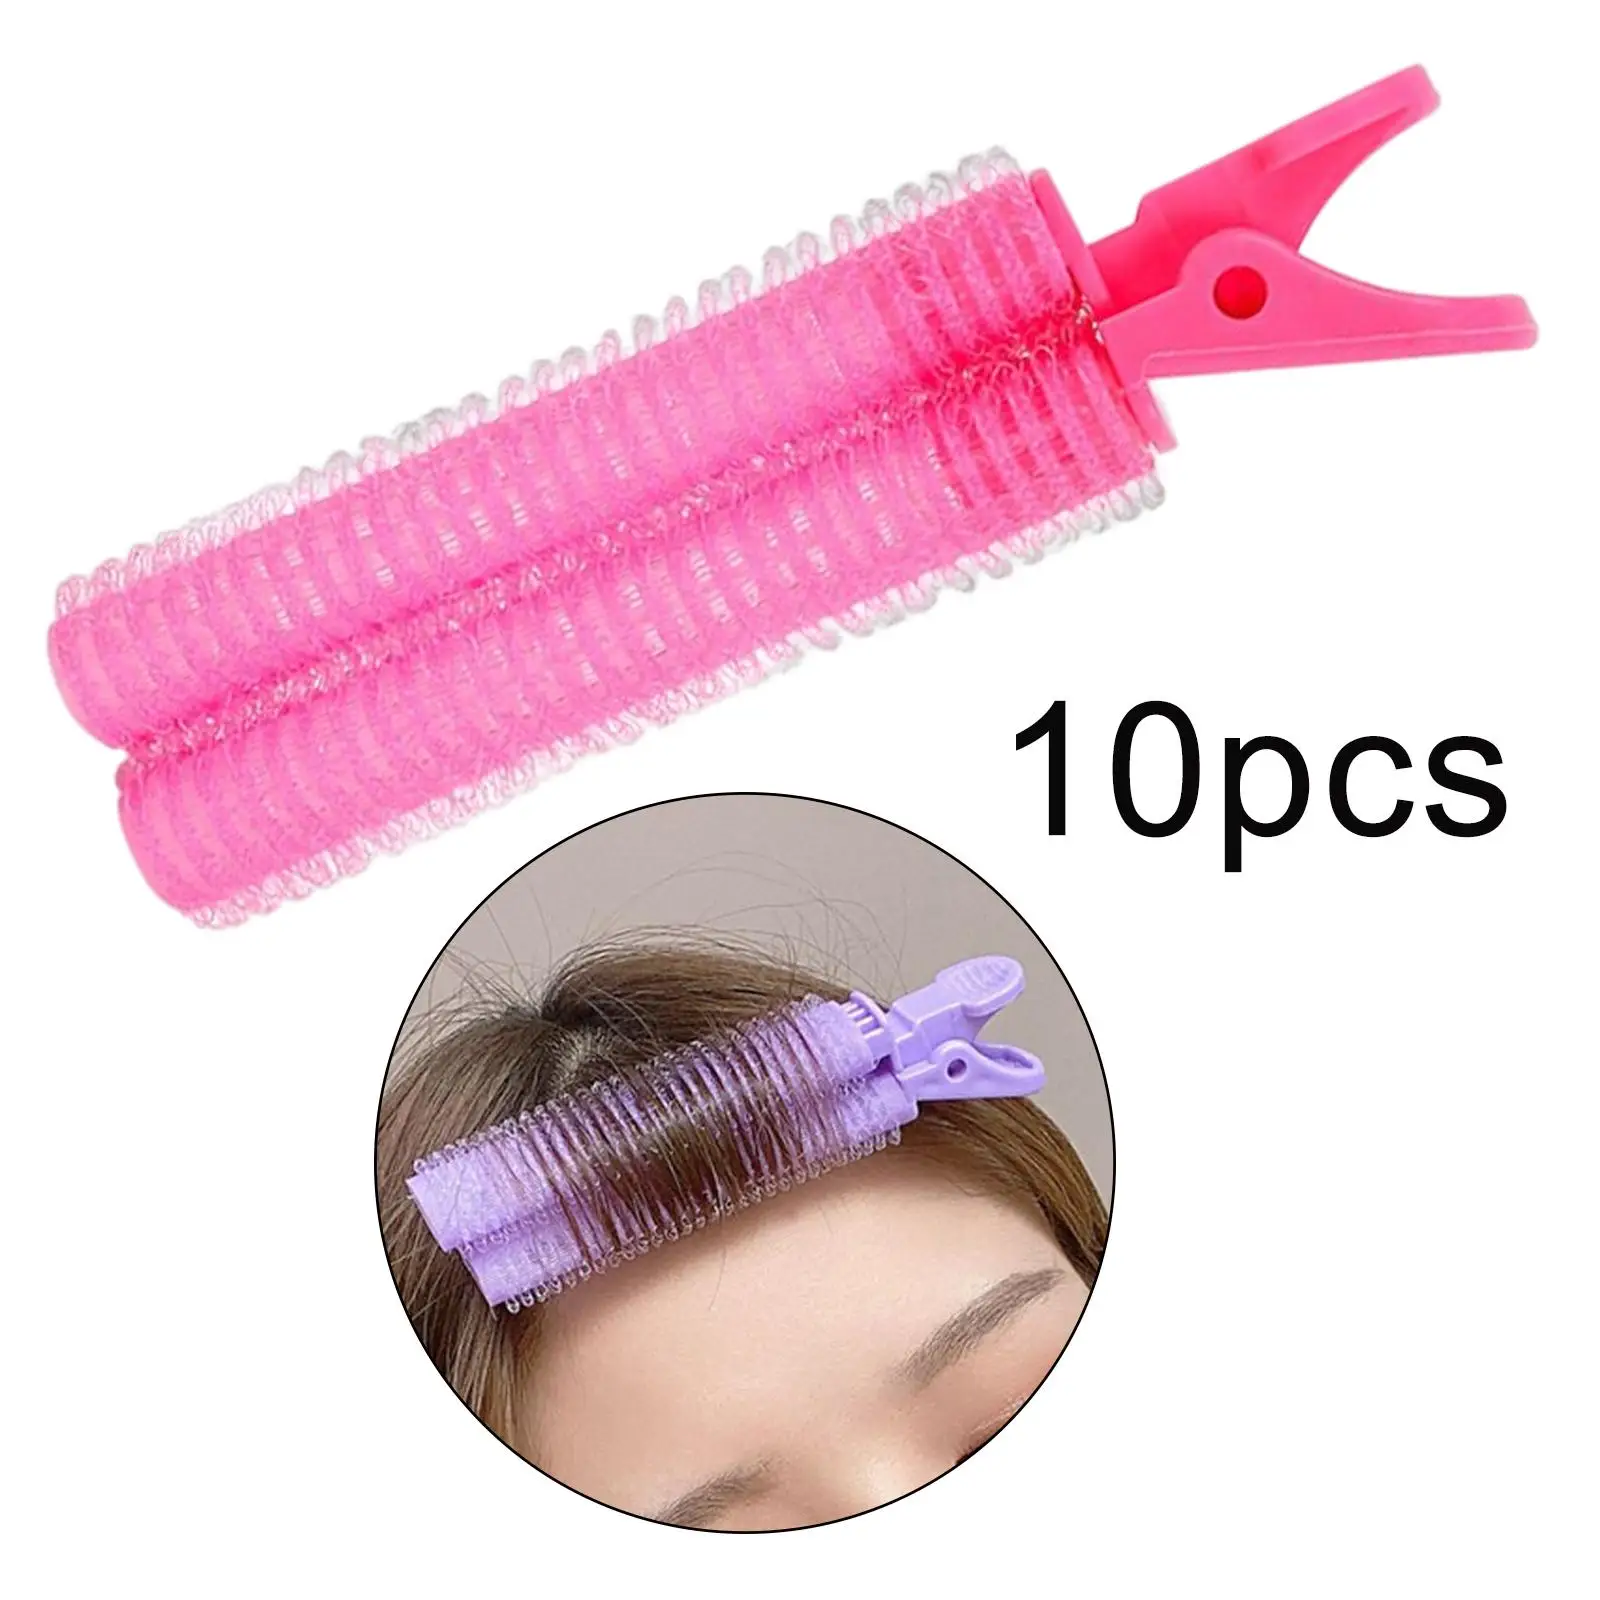 10Pcs Hair Bangs Curling Clips Washable Self Adhesive Hair Top Barrel Durable Reusable Hair Bangs Roller for Hair Styling Girls